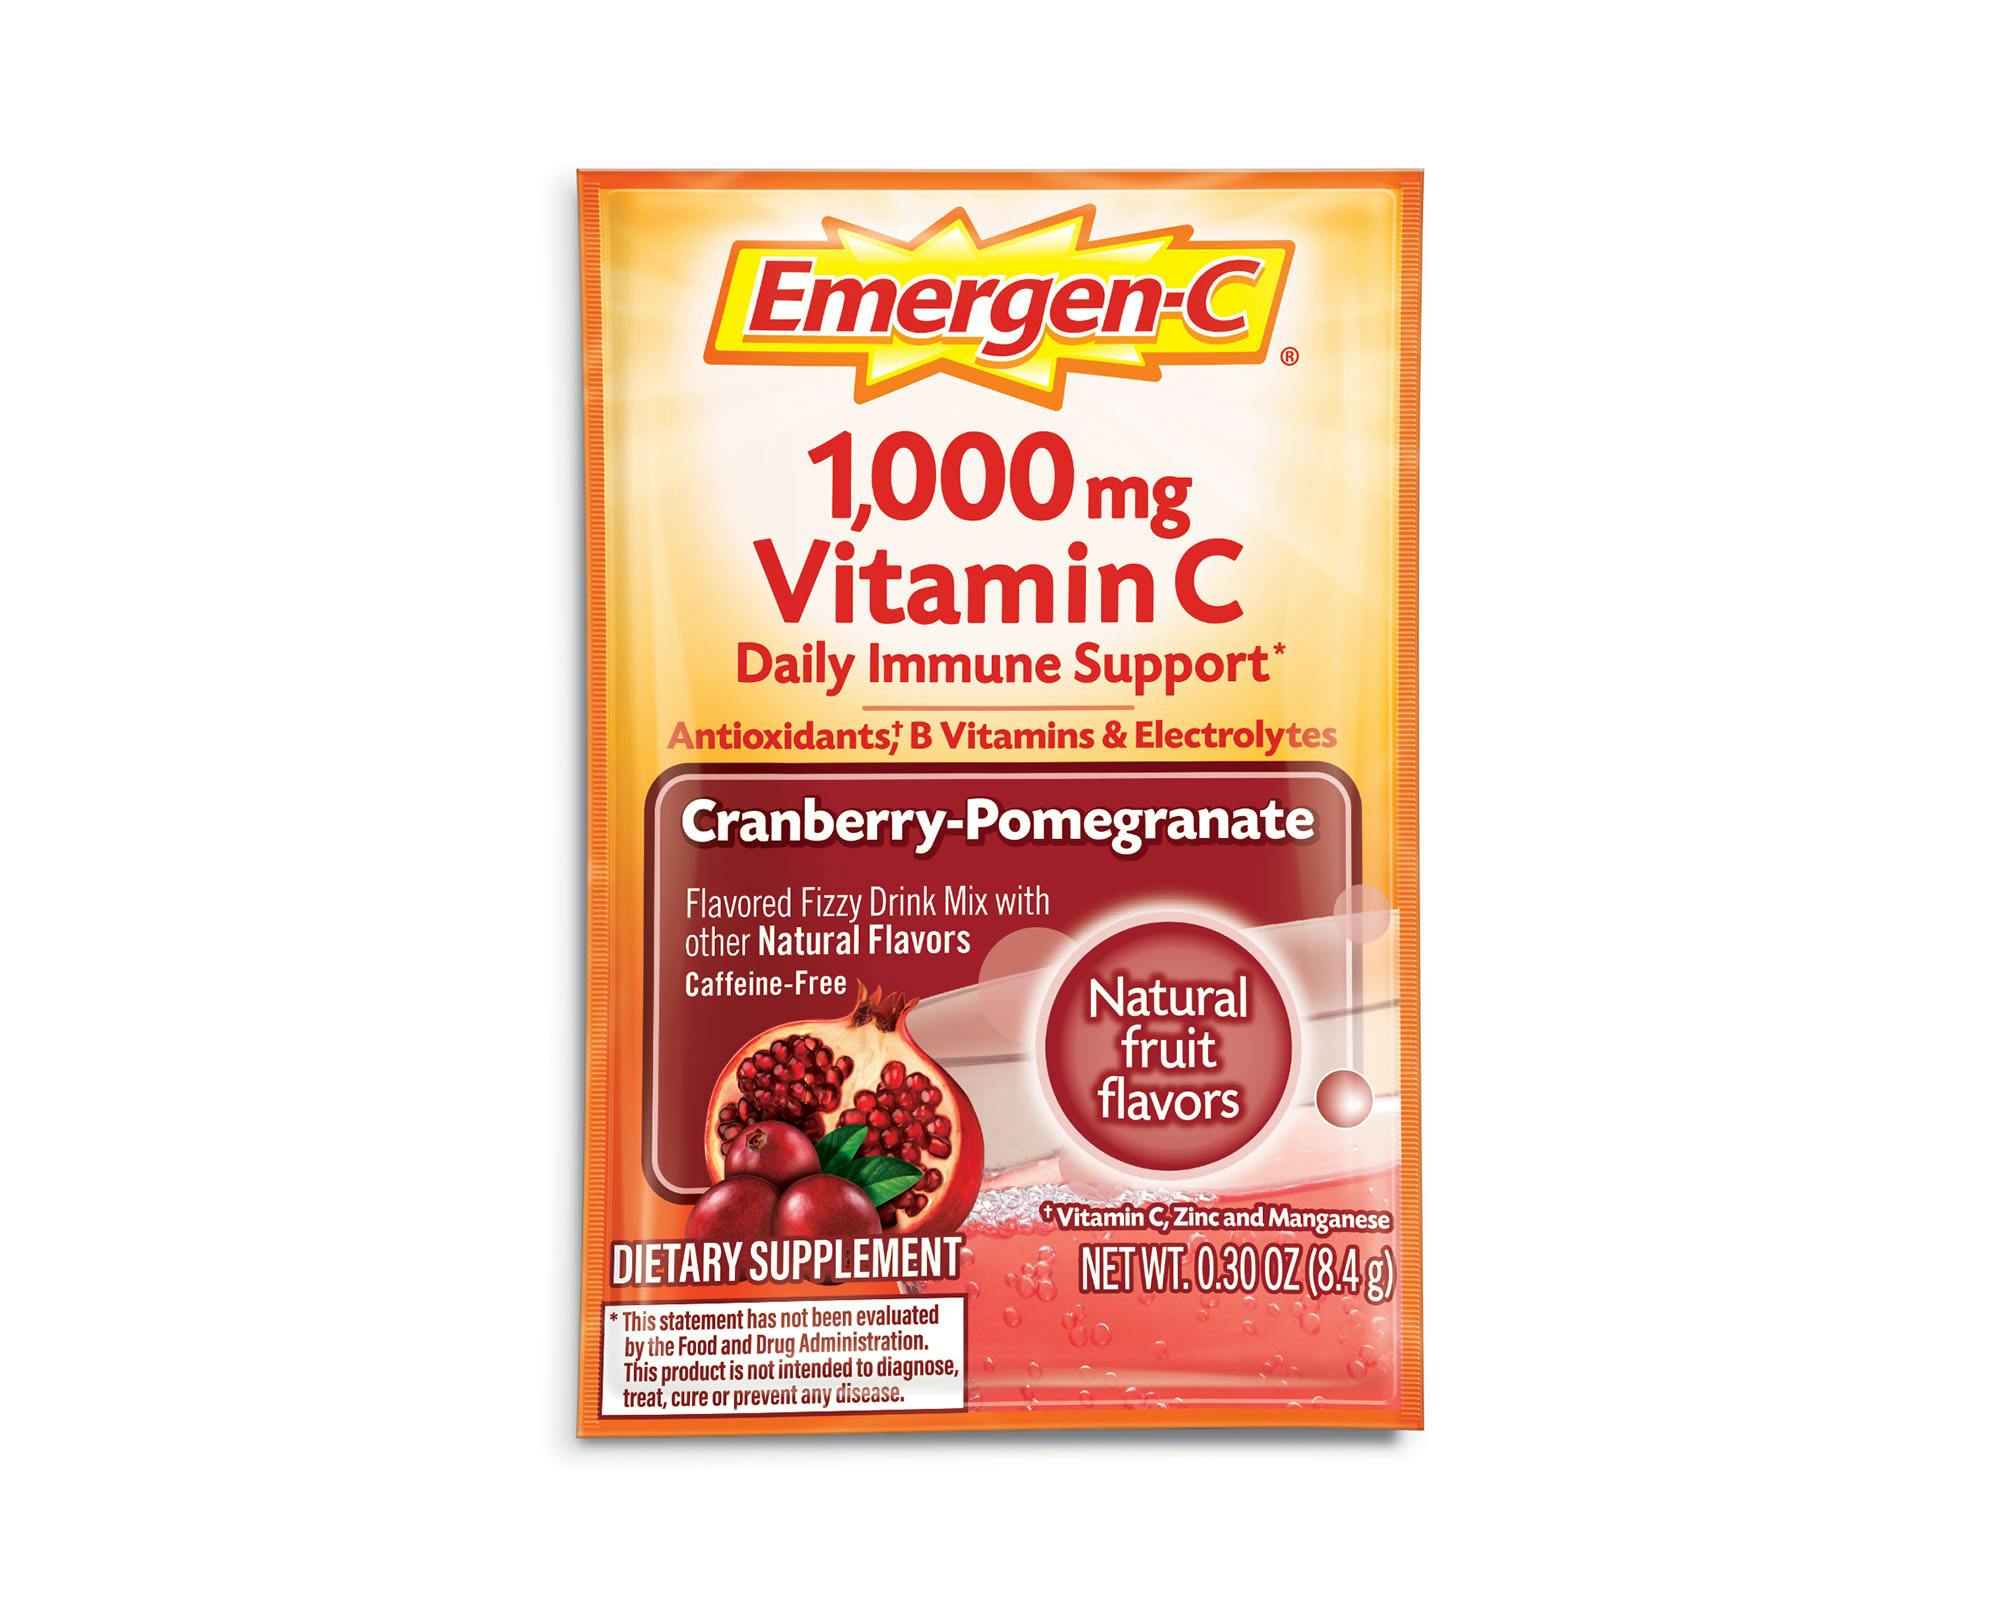 Cranberry-Pomegranate Original Immune Support packet